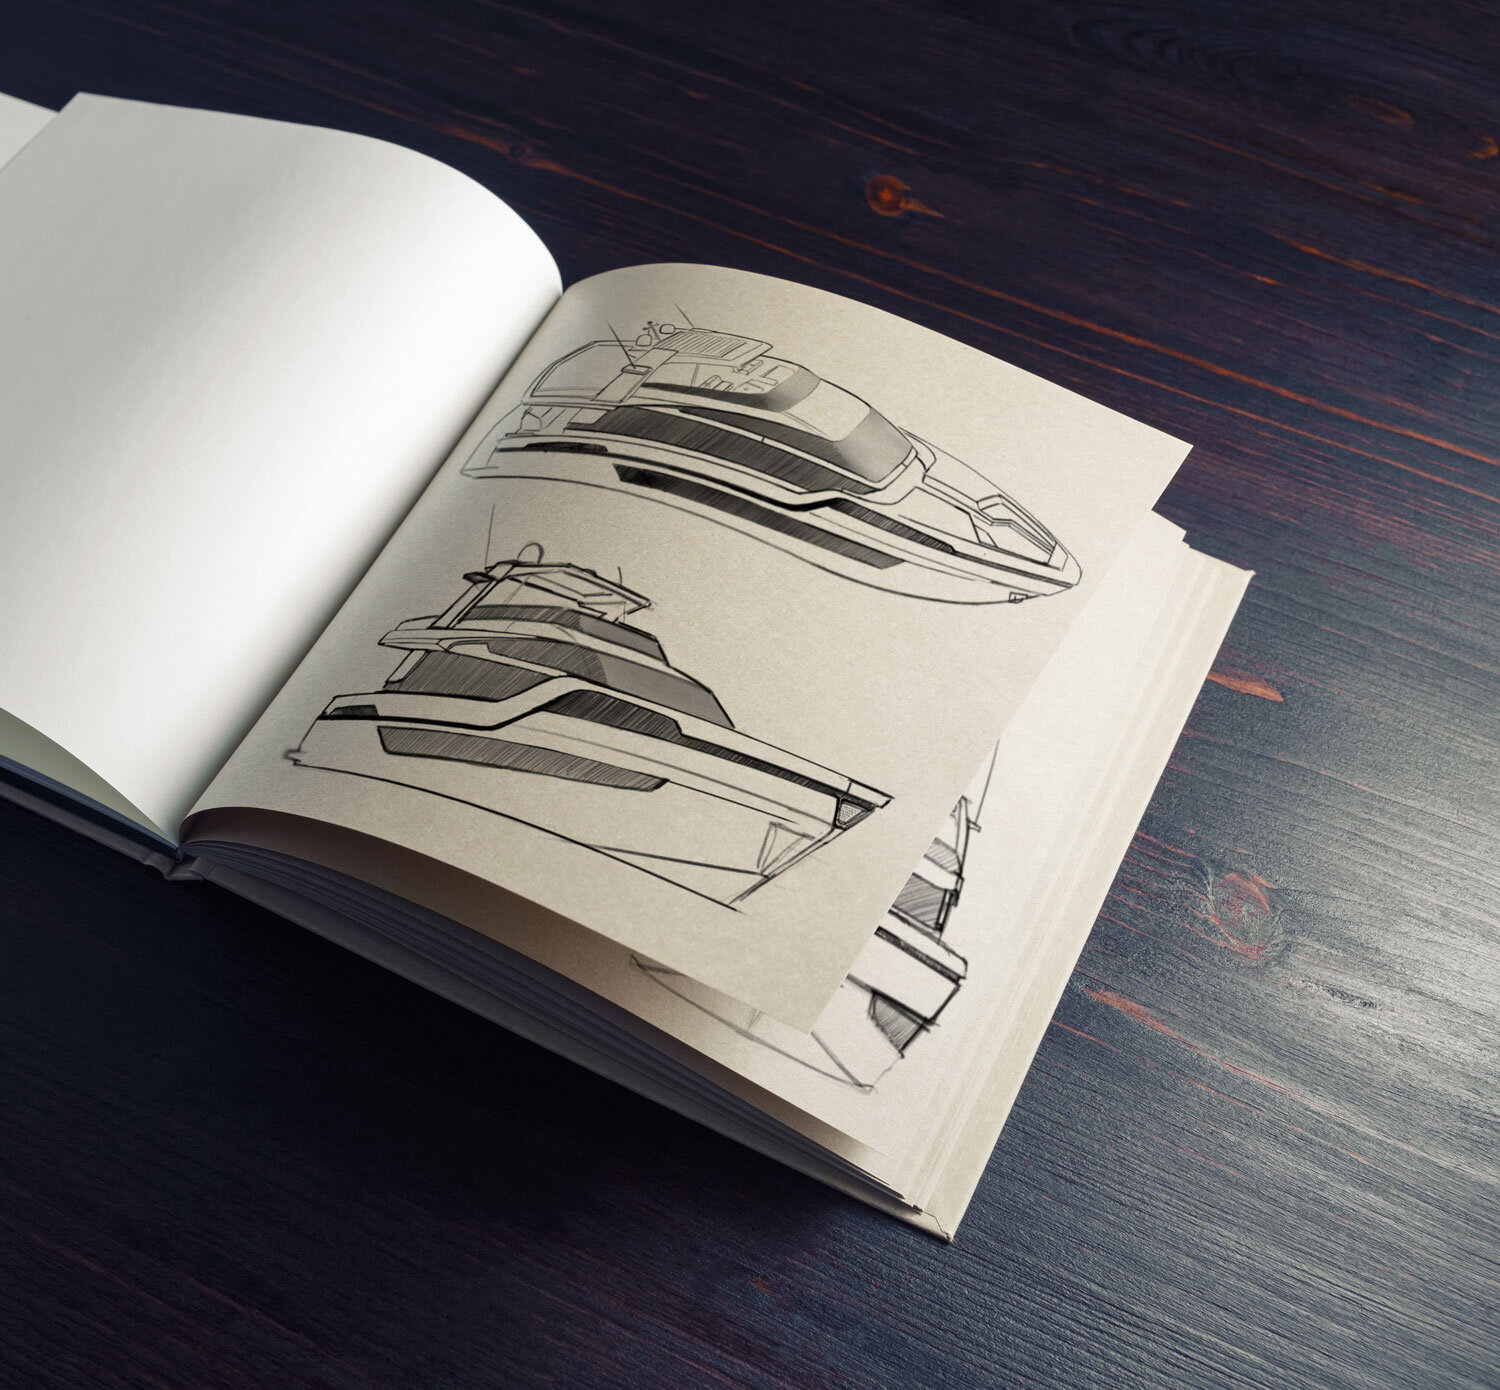 Sketchbook-with-Sketches-2.jpg